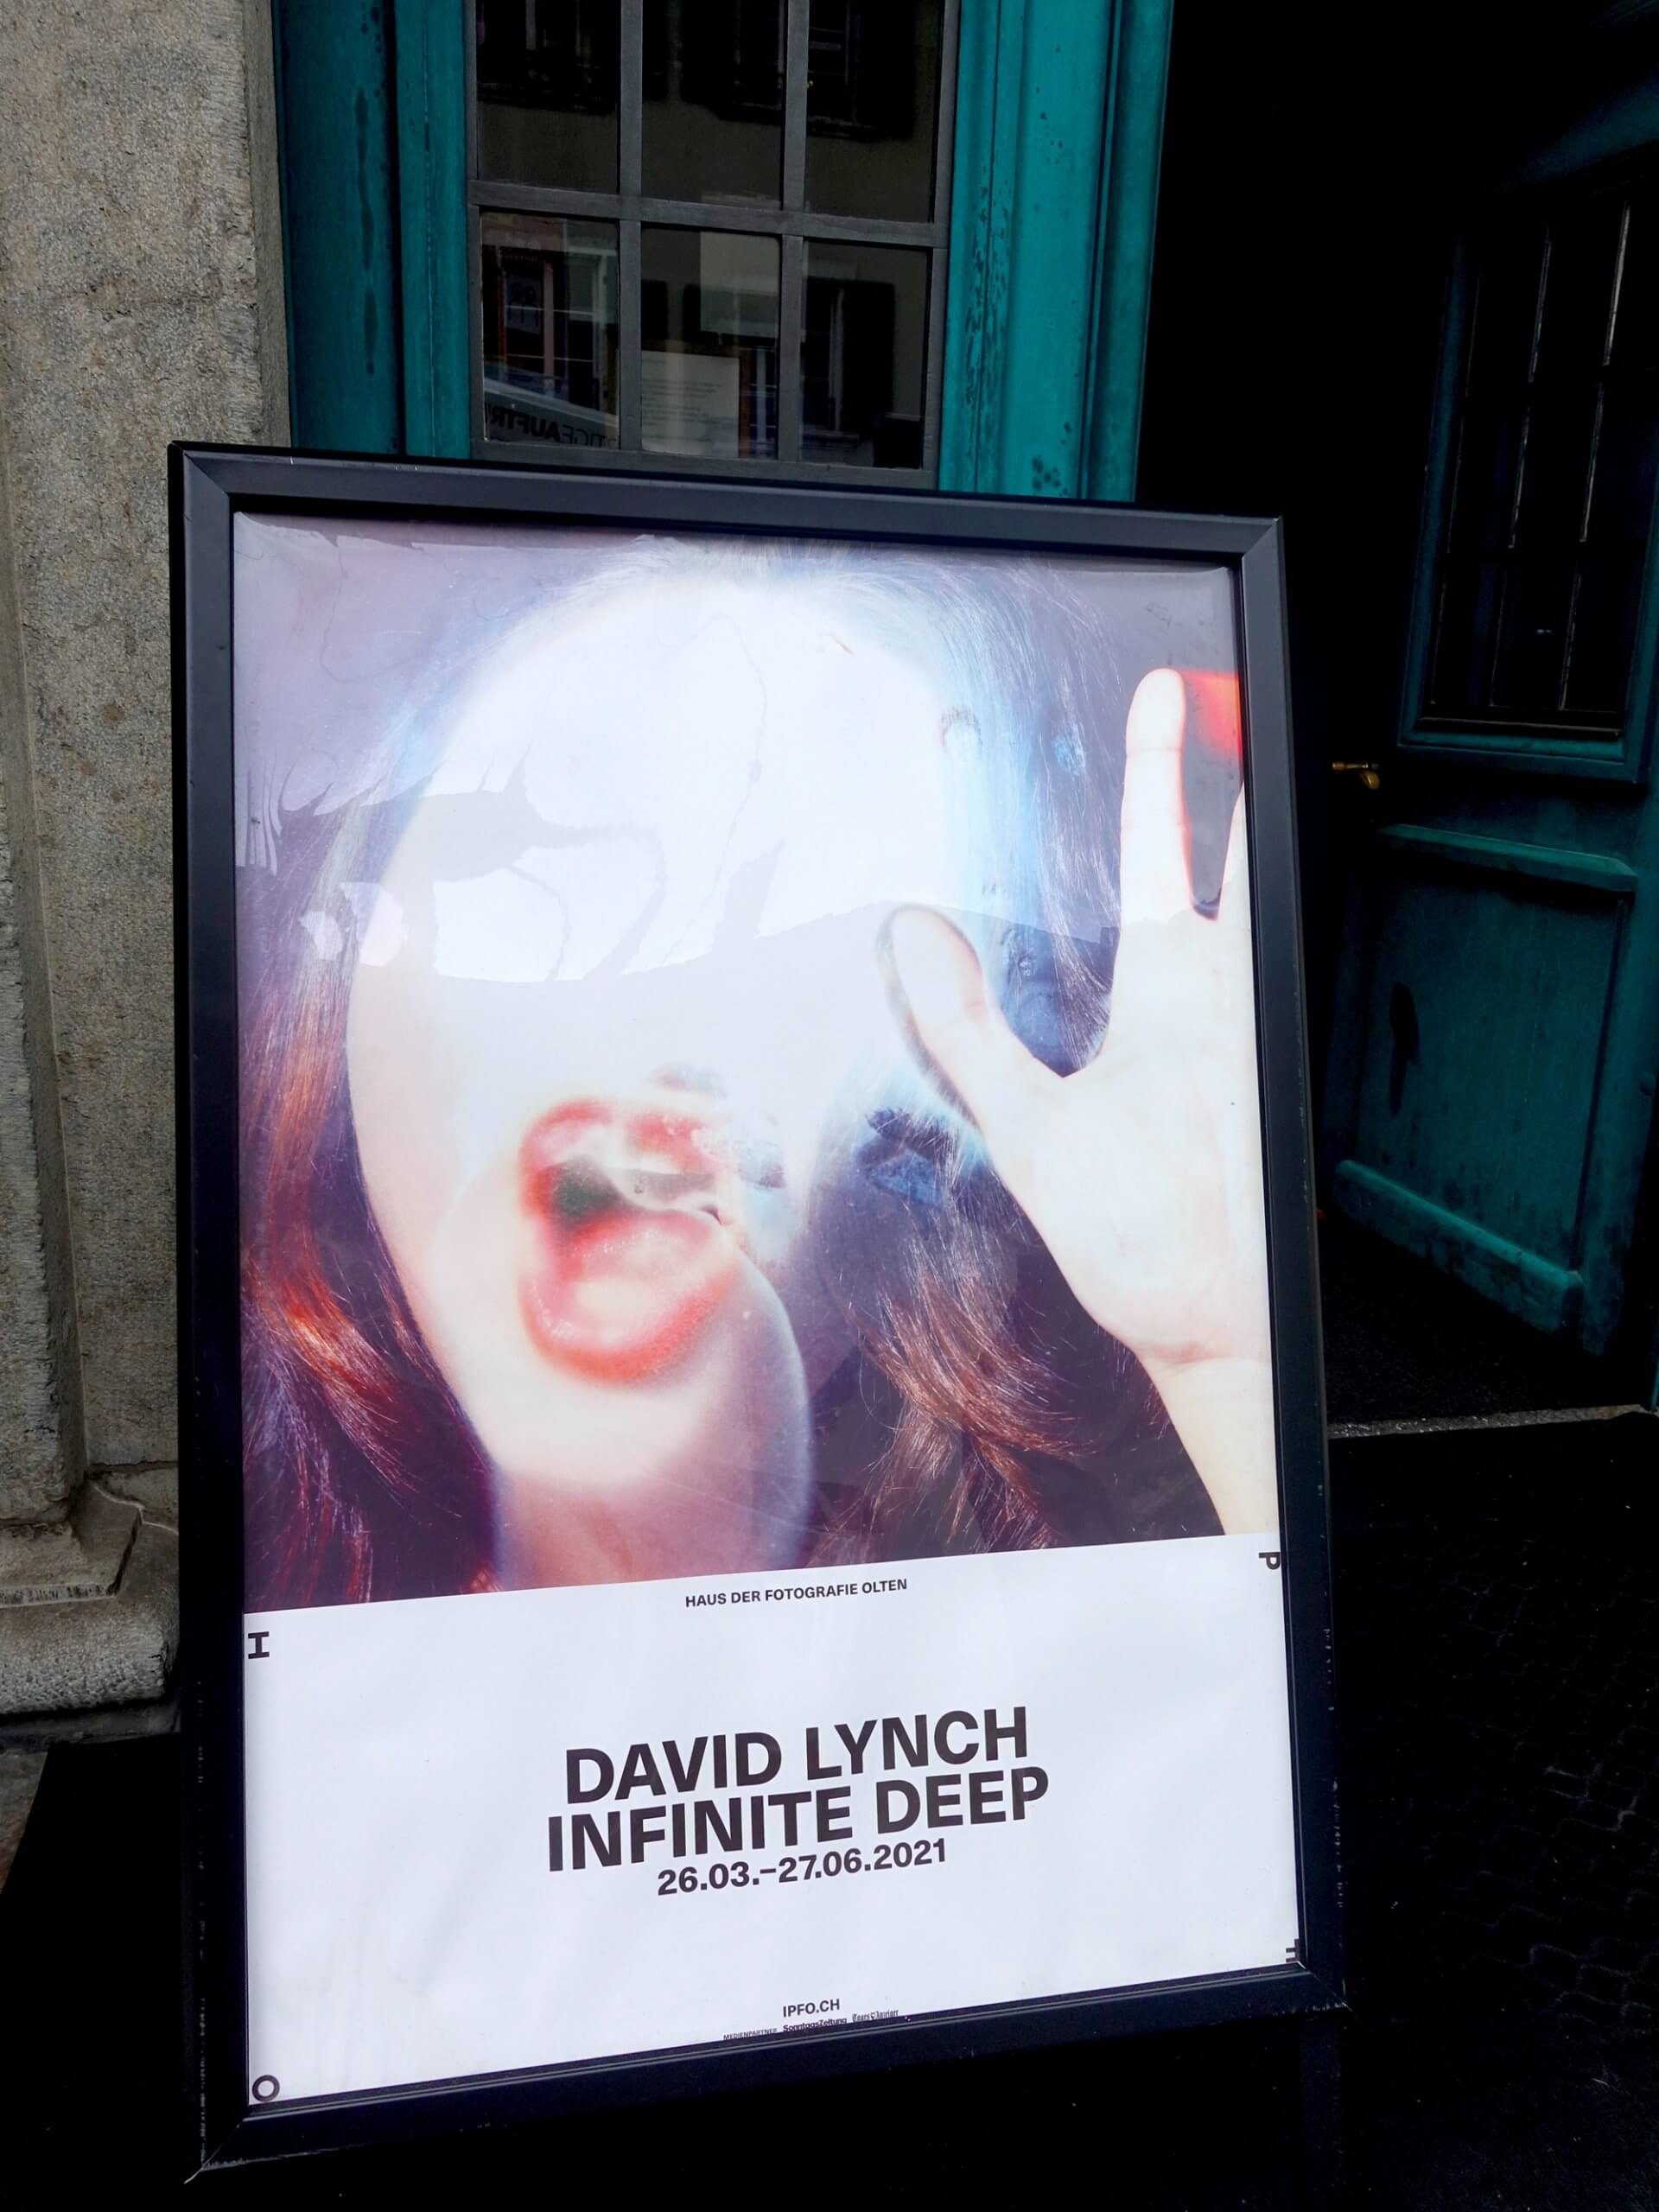 David Lynch - Infinite Deep Exhibit in Olten, Switzerland